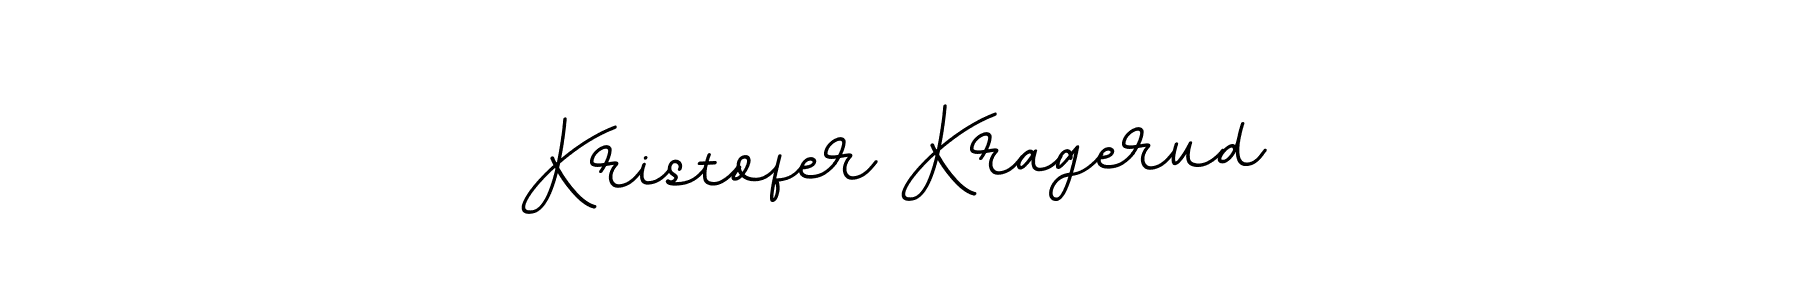 How to Draw Kristofer Kragerud signature style? BallpointsItalic-DORy9 is a latest design signature styles for name Kristofer Kragerud. Kristofer Kragerud signature style 11 images and pictures png